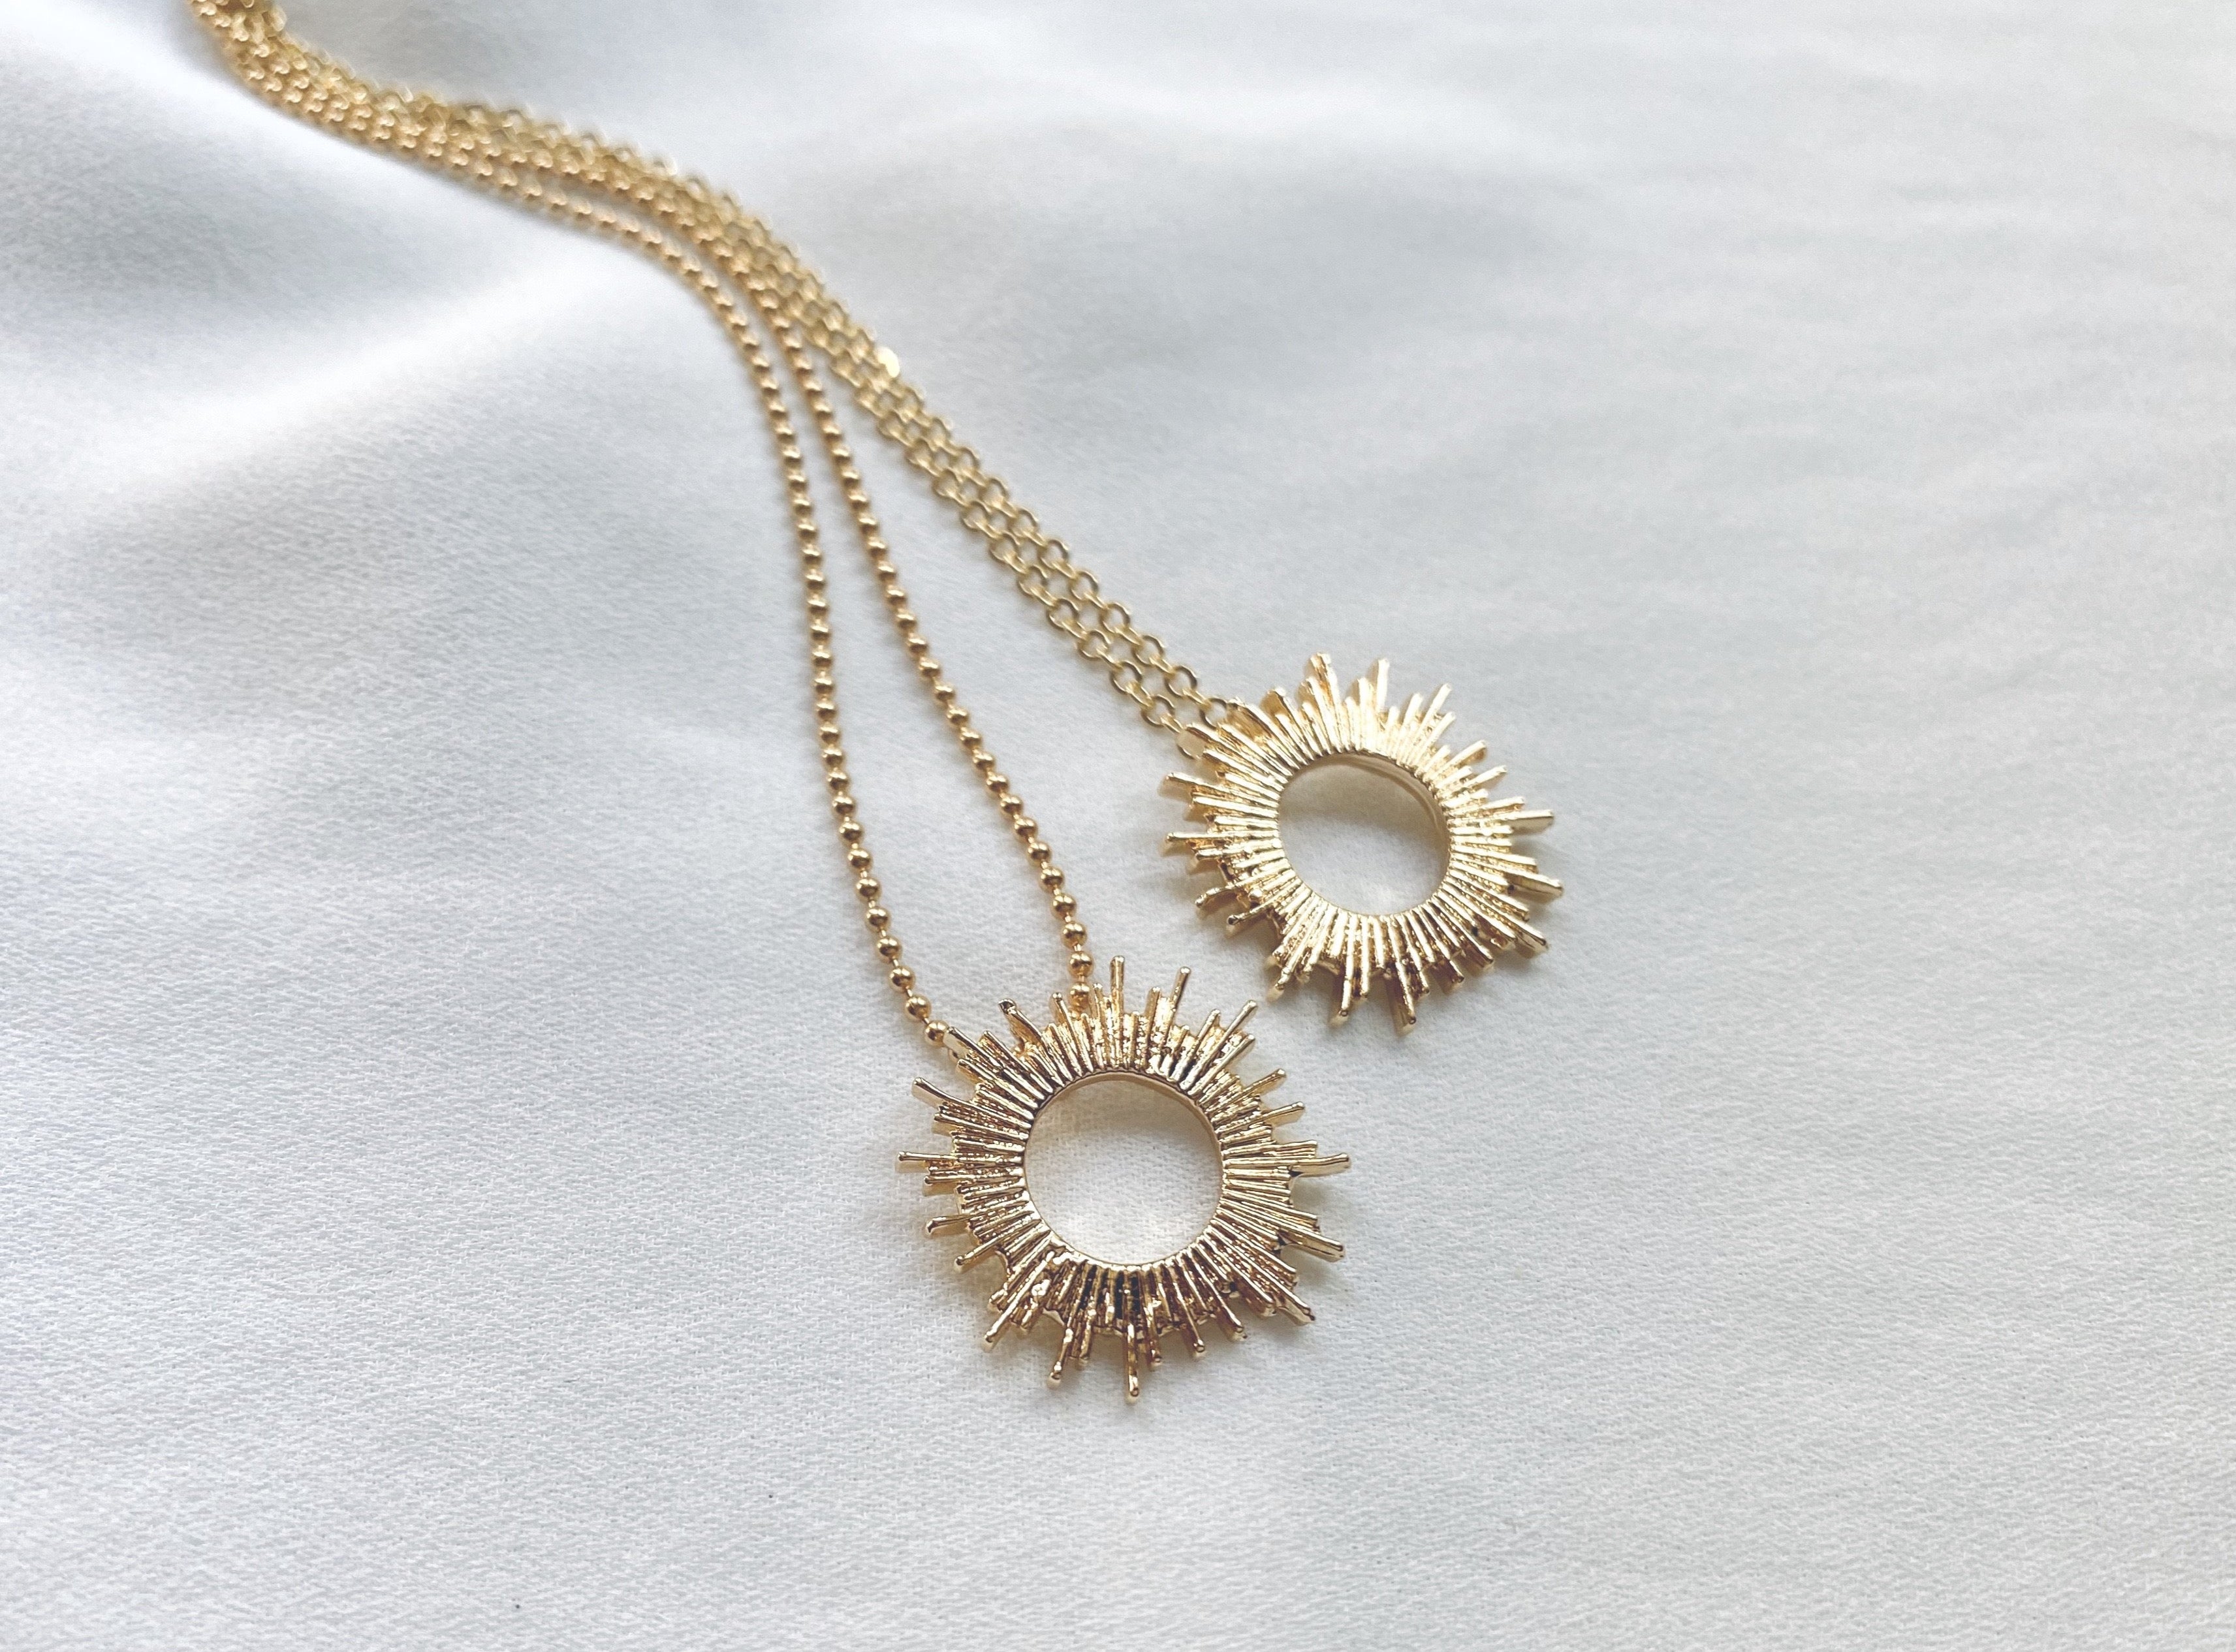 Gold Filled Sunburst Pendant Necklace - Sunshine Charm